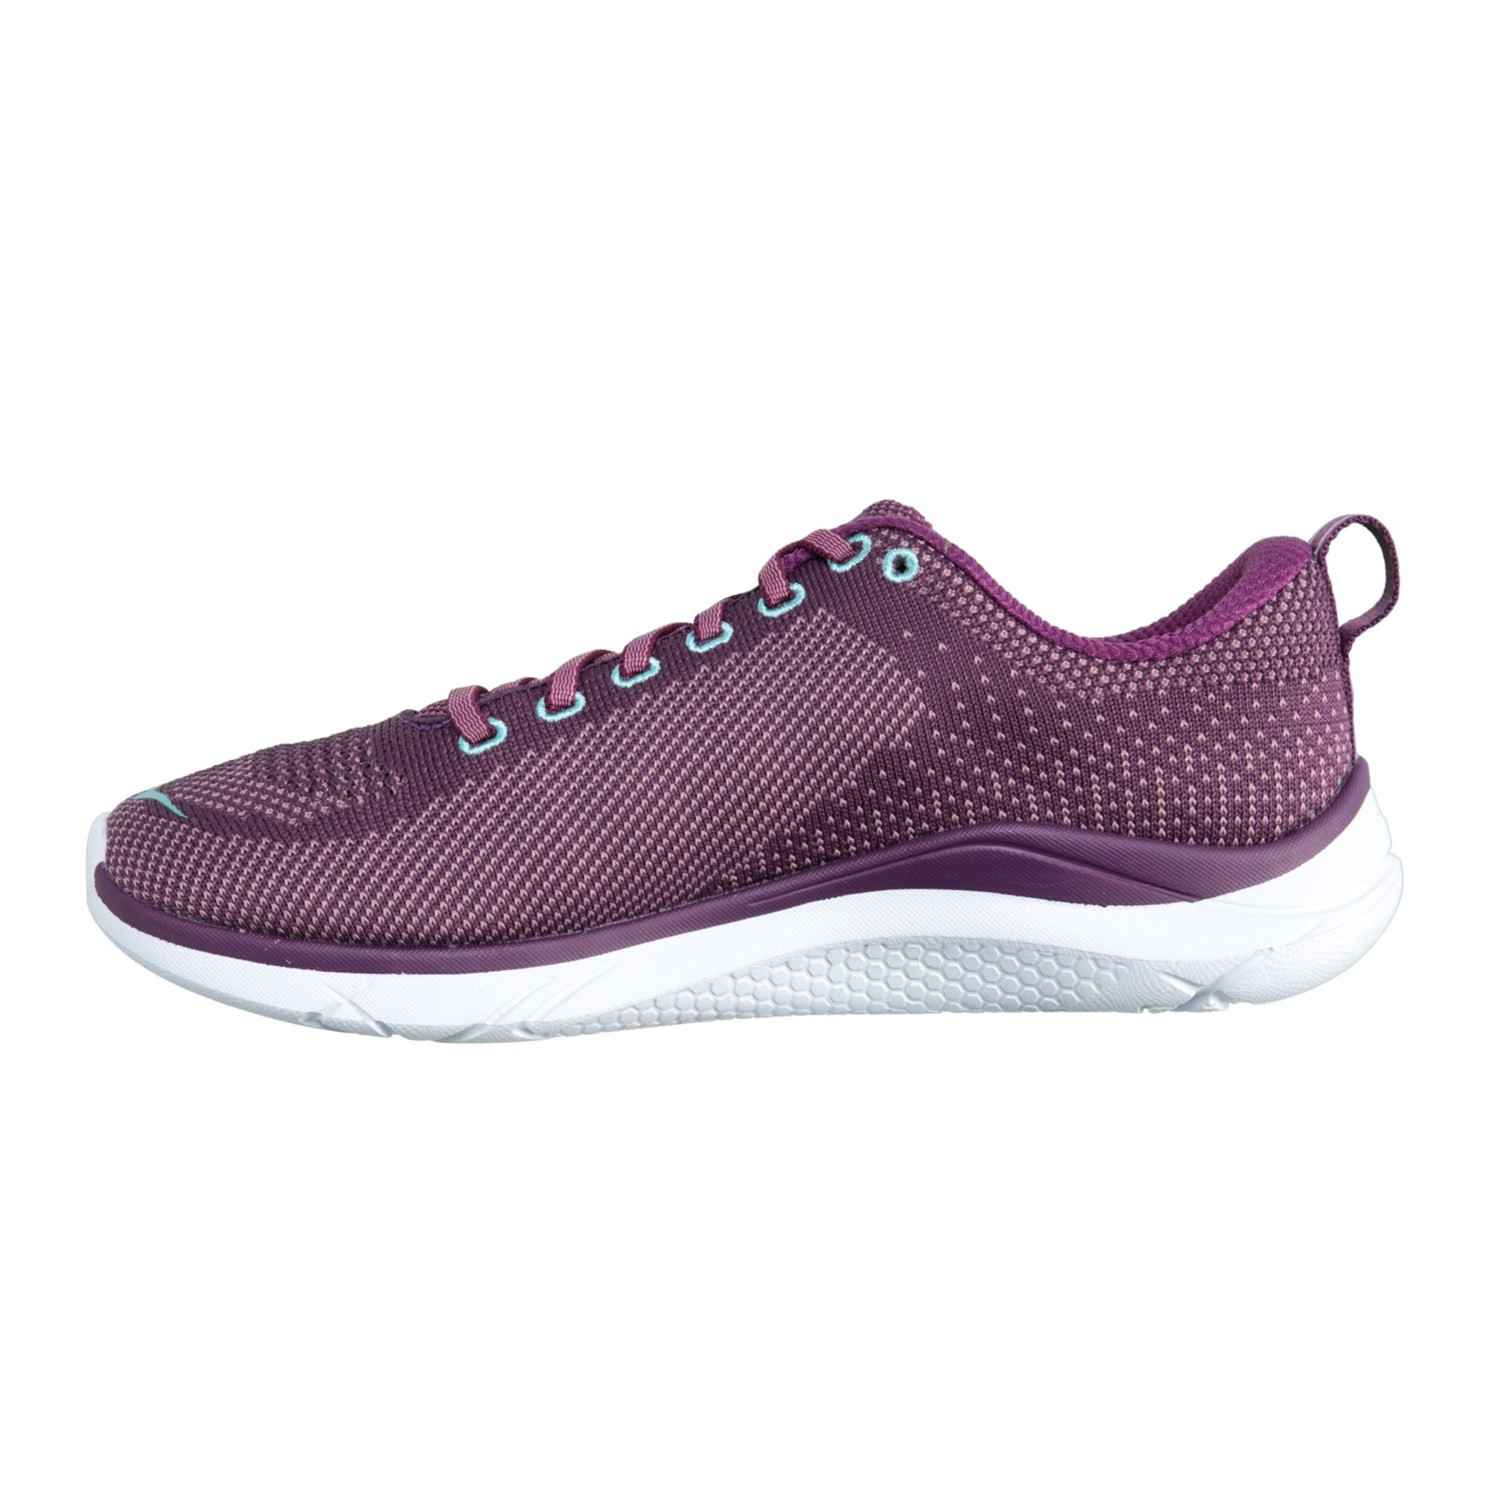 Hoka One One Hupana Running Shoes (For Women) - Save 39%